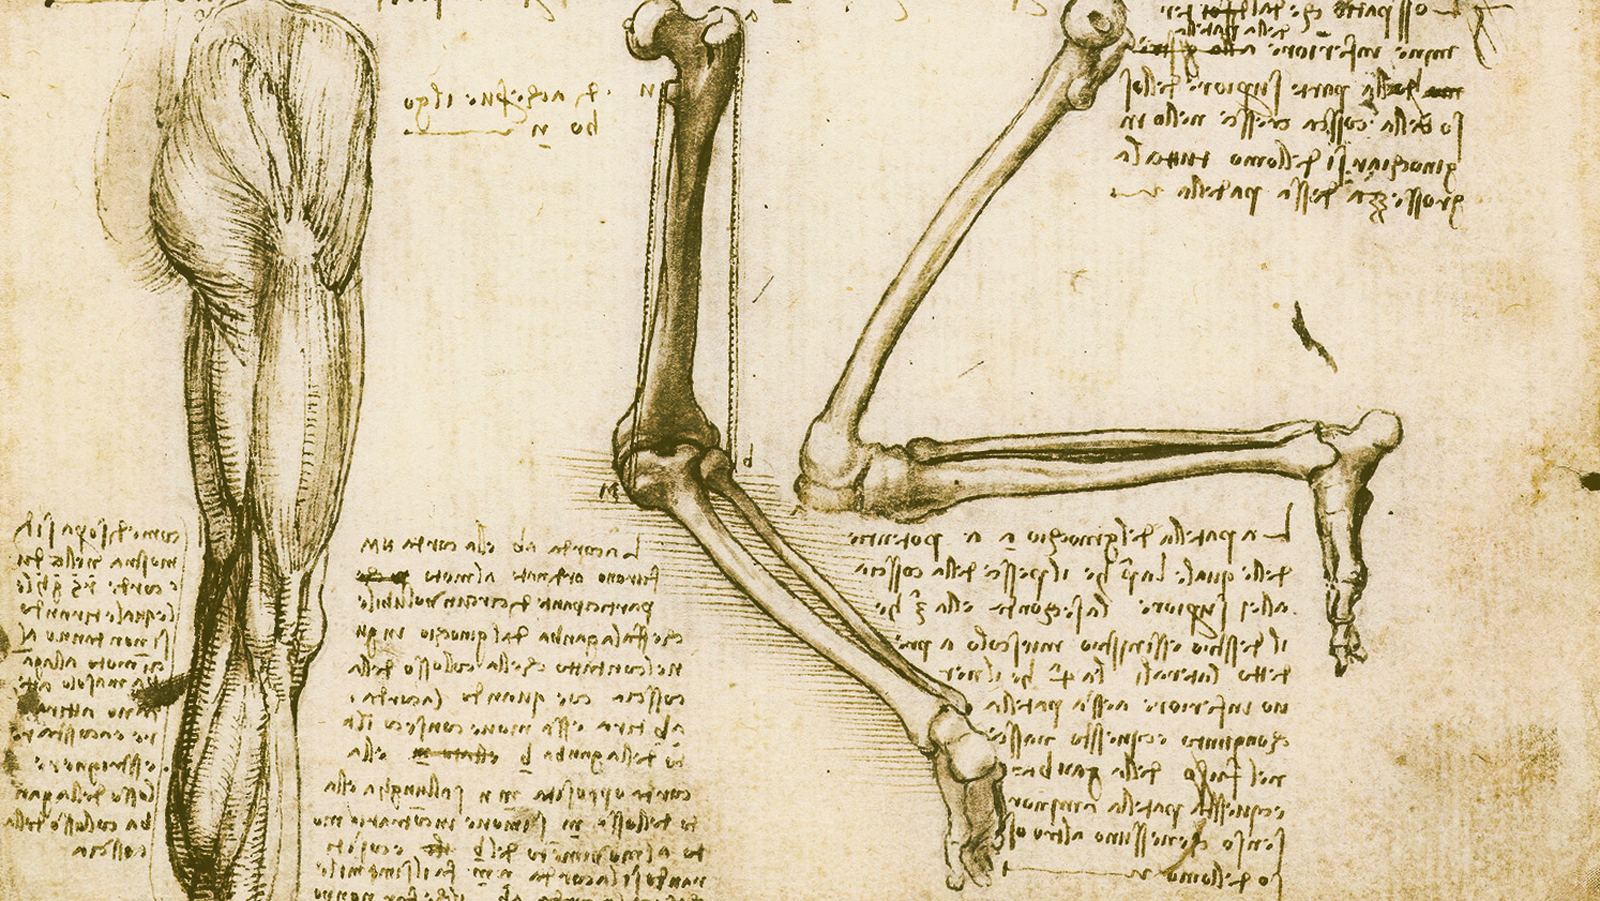 Leonardo da Vinci illustration of leg bones and musculature